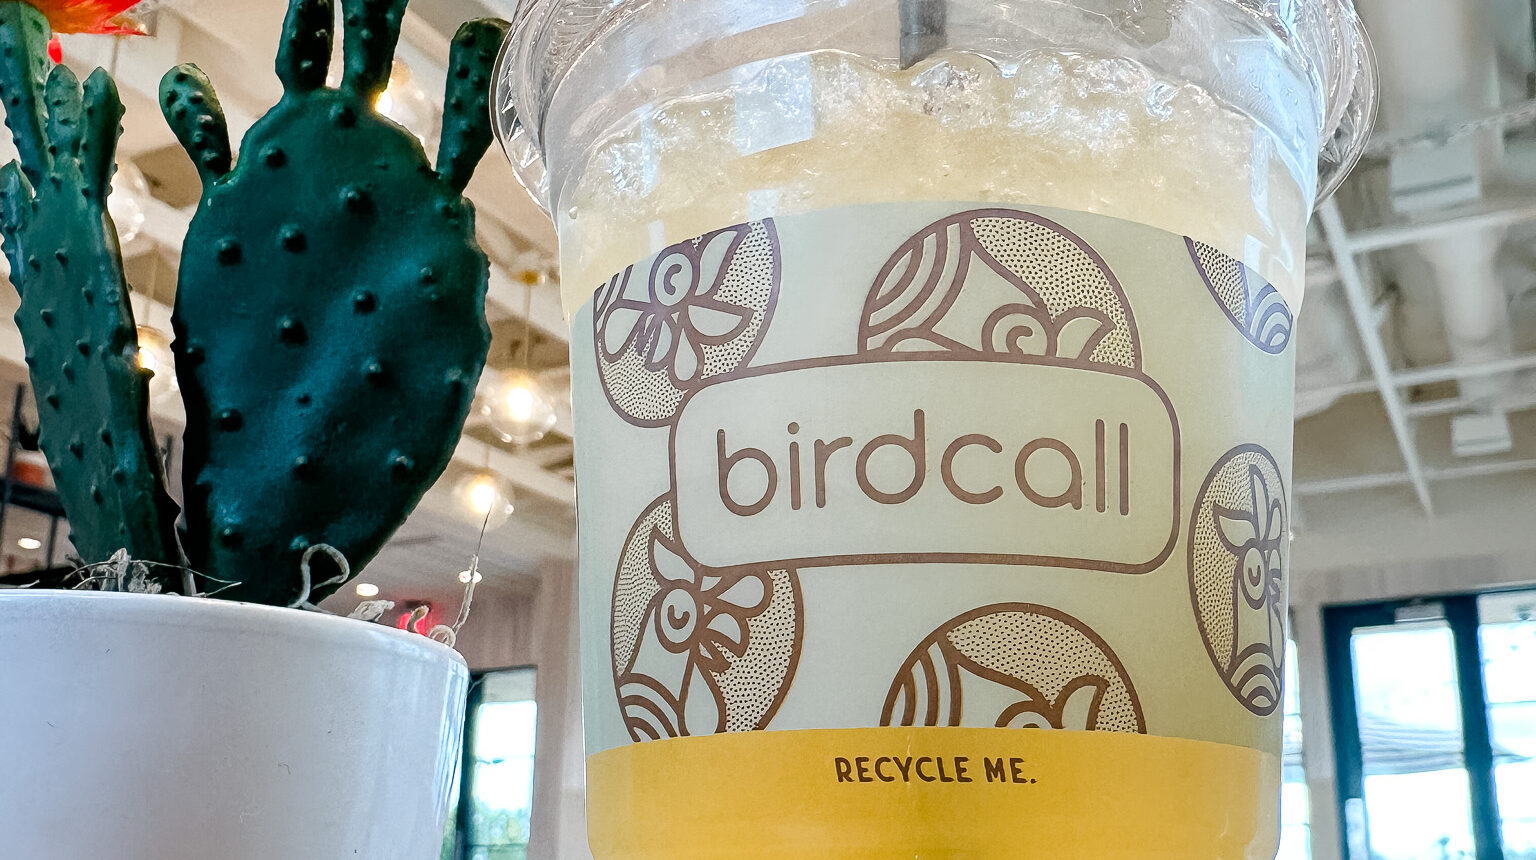 Birdcall restaurant in Scottsdale, AZ